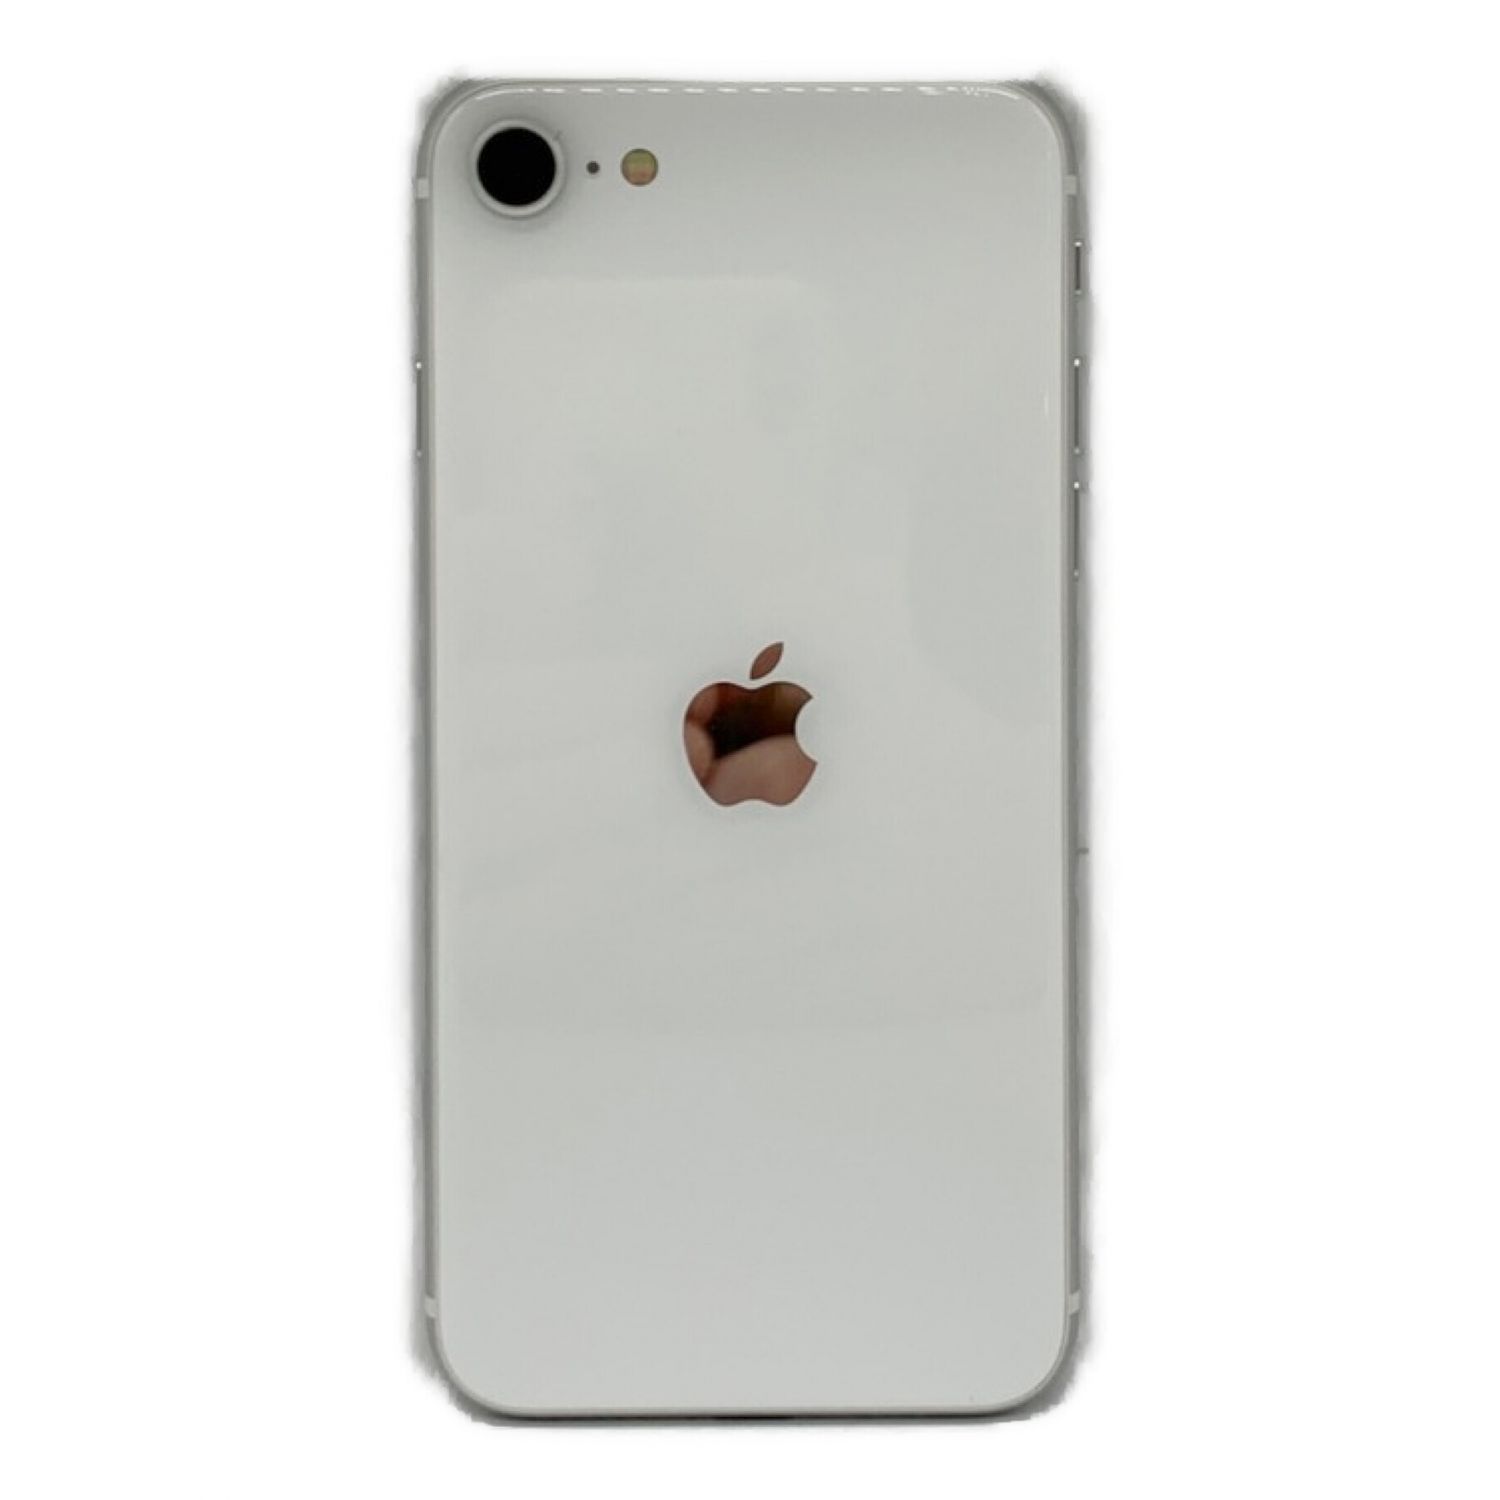 Apple (アップル) iPhone SE(第2世代) 128GB MXD12J/A au iOS